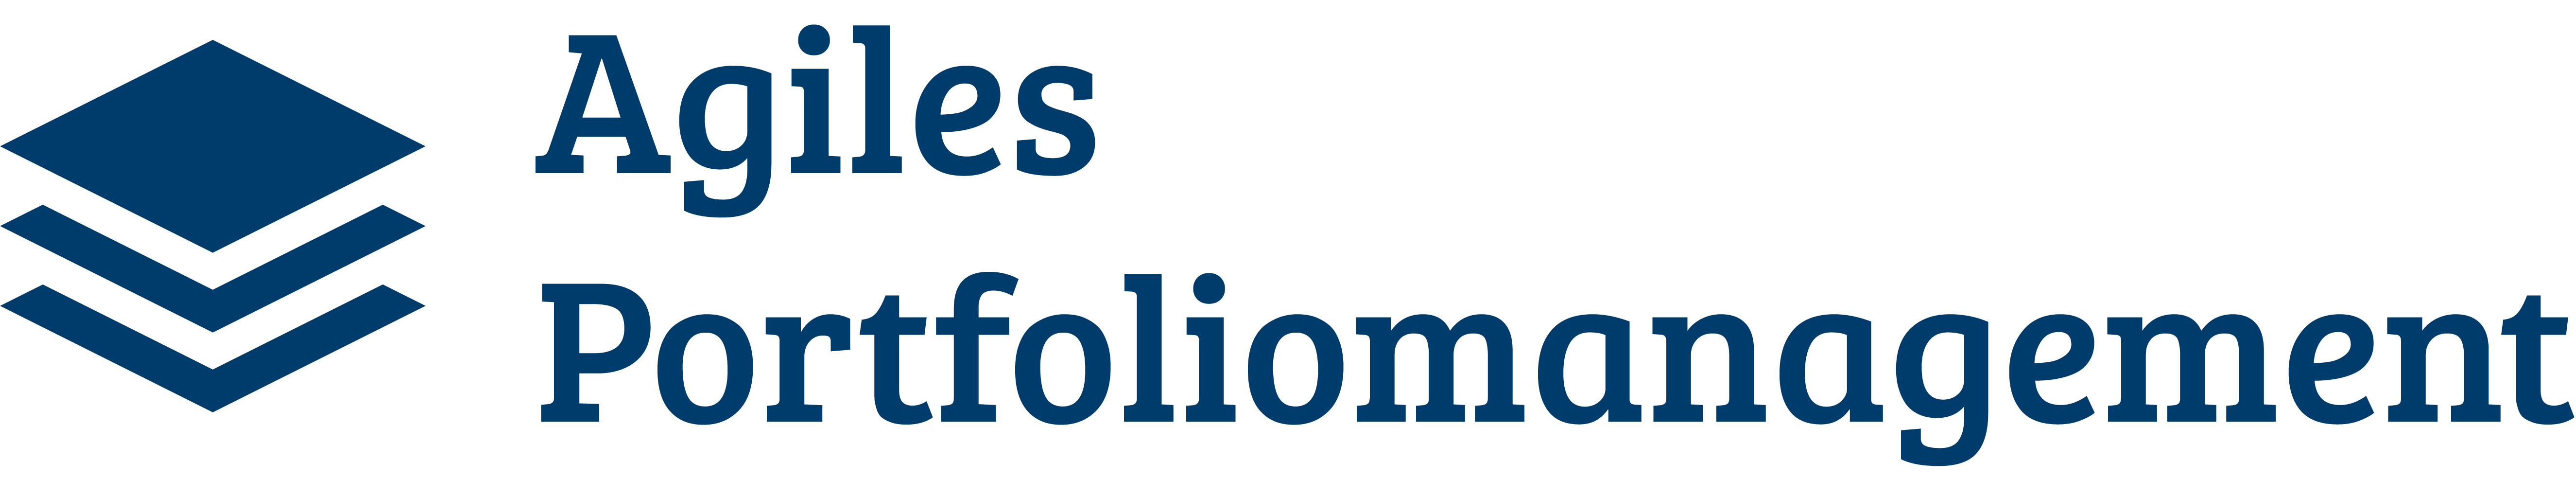 Agiles Portfoliomanagement Logo